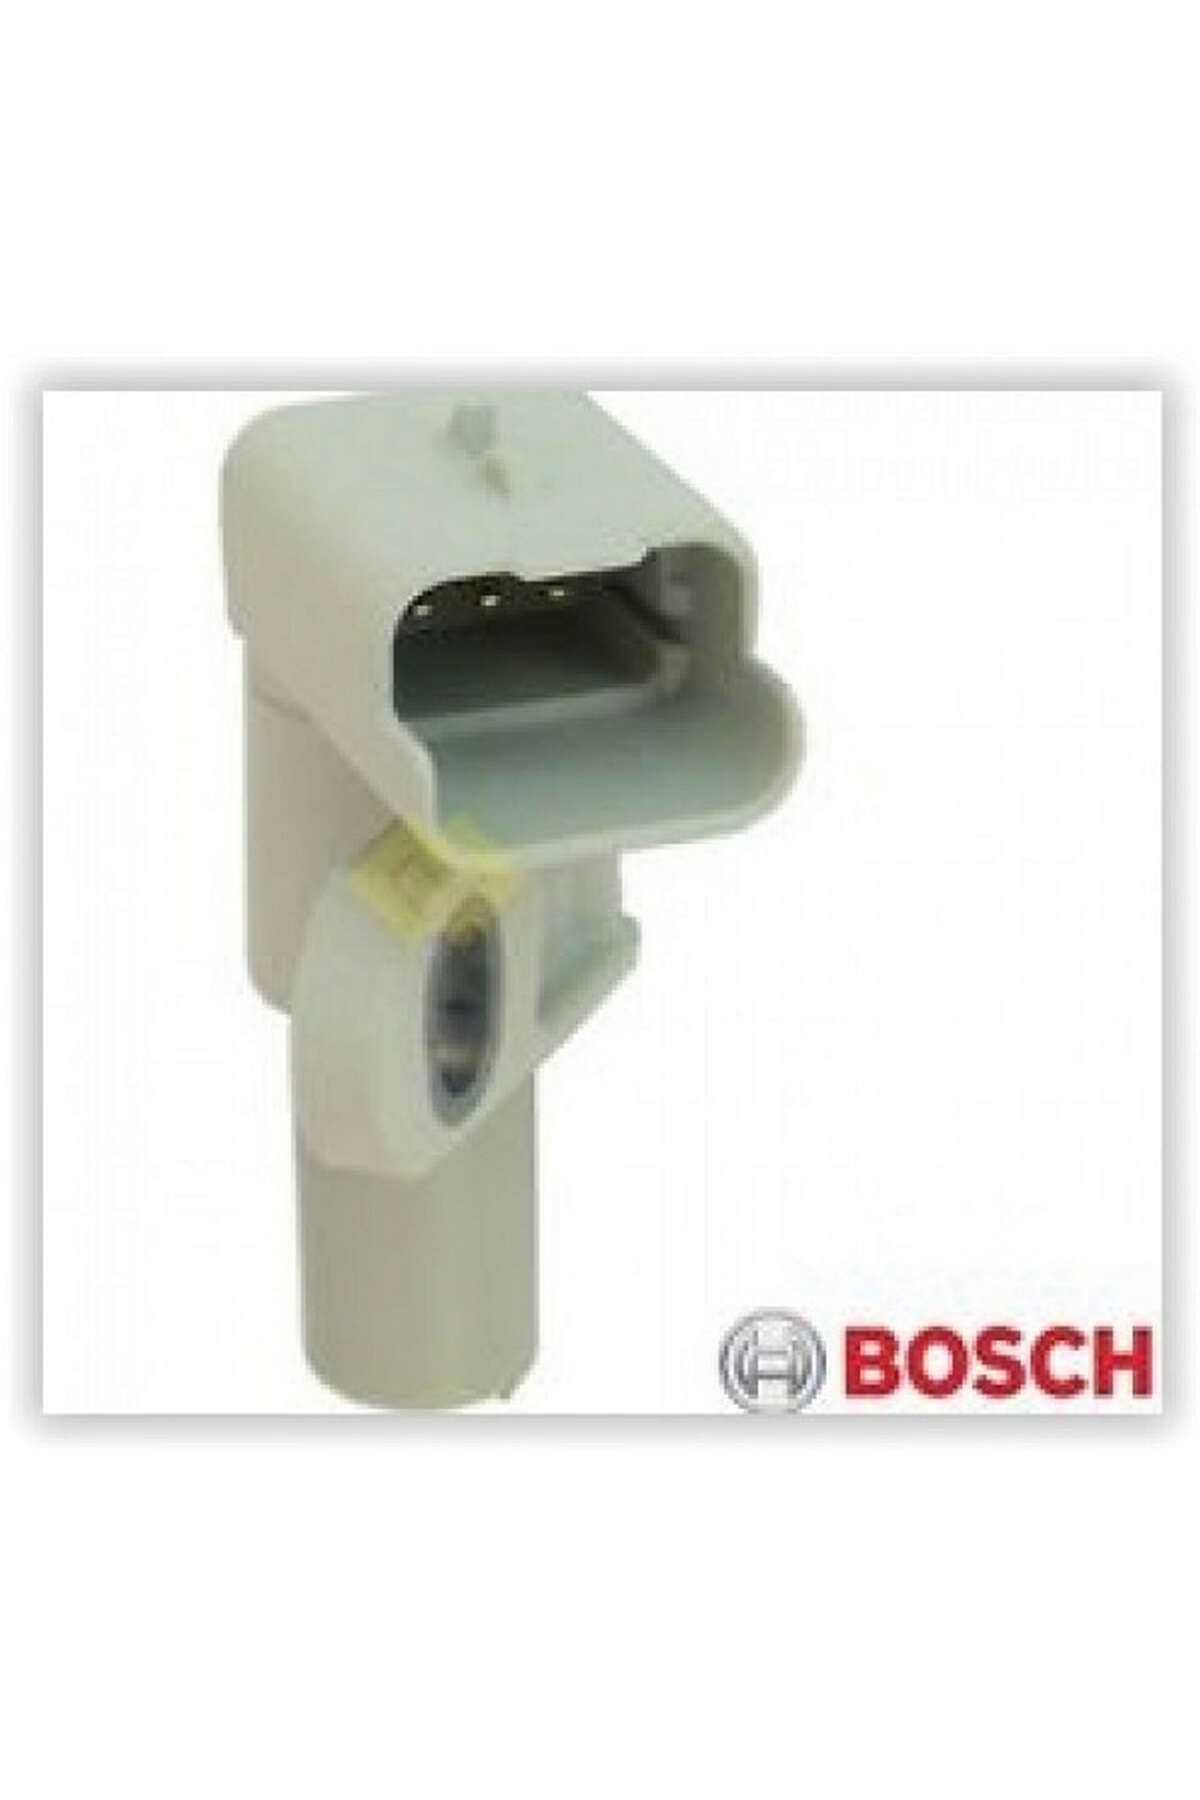 Bosch KRANK MİL SENSÖRÜ P206 02 P307 00 P308 09 5008-3008 09 C-MAX 08 FOCUS 05 SCUDO 07 C41.6HDI-2. 27053